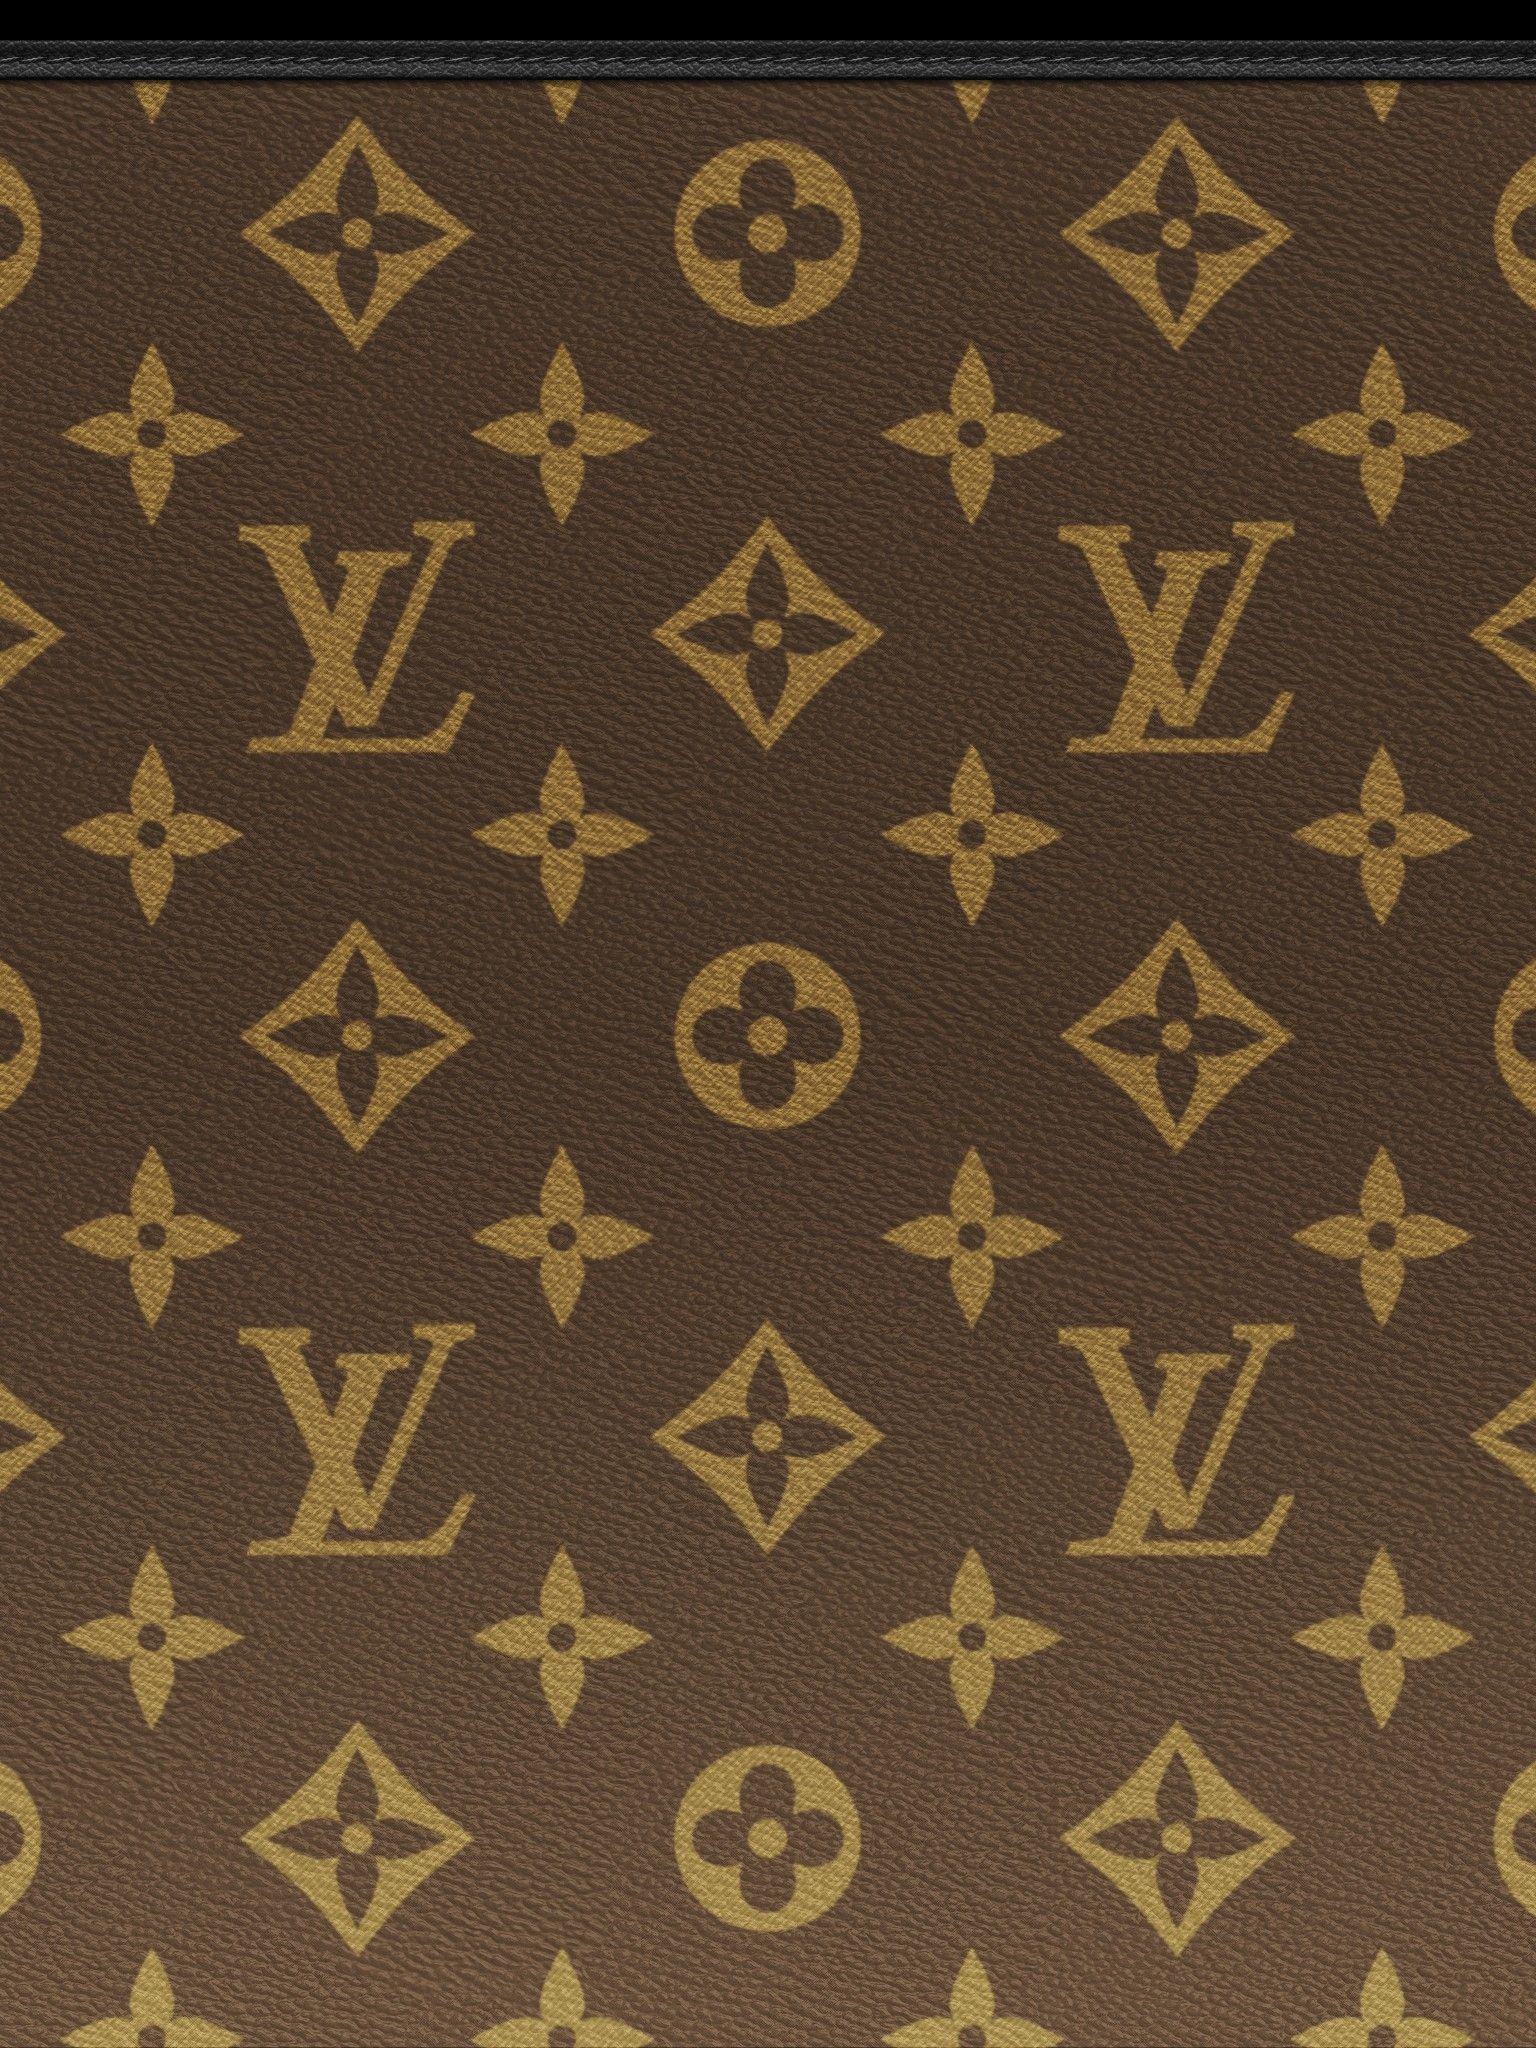 Wallpapers Louis Vuitton - Wallpaper Cave